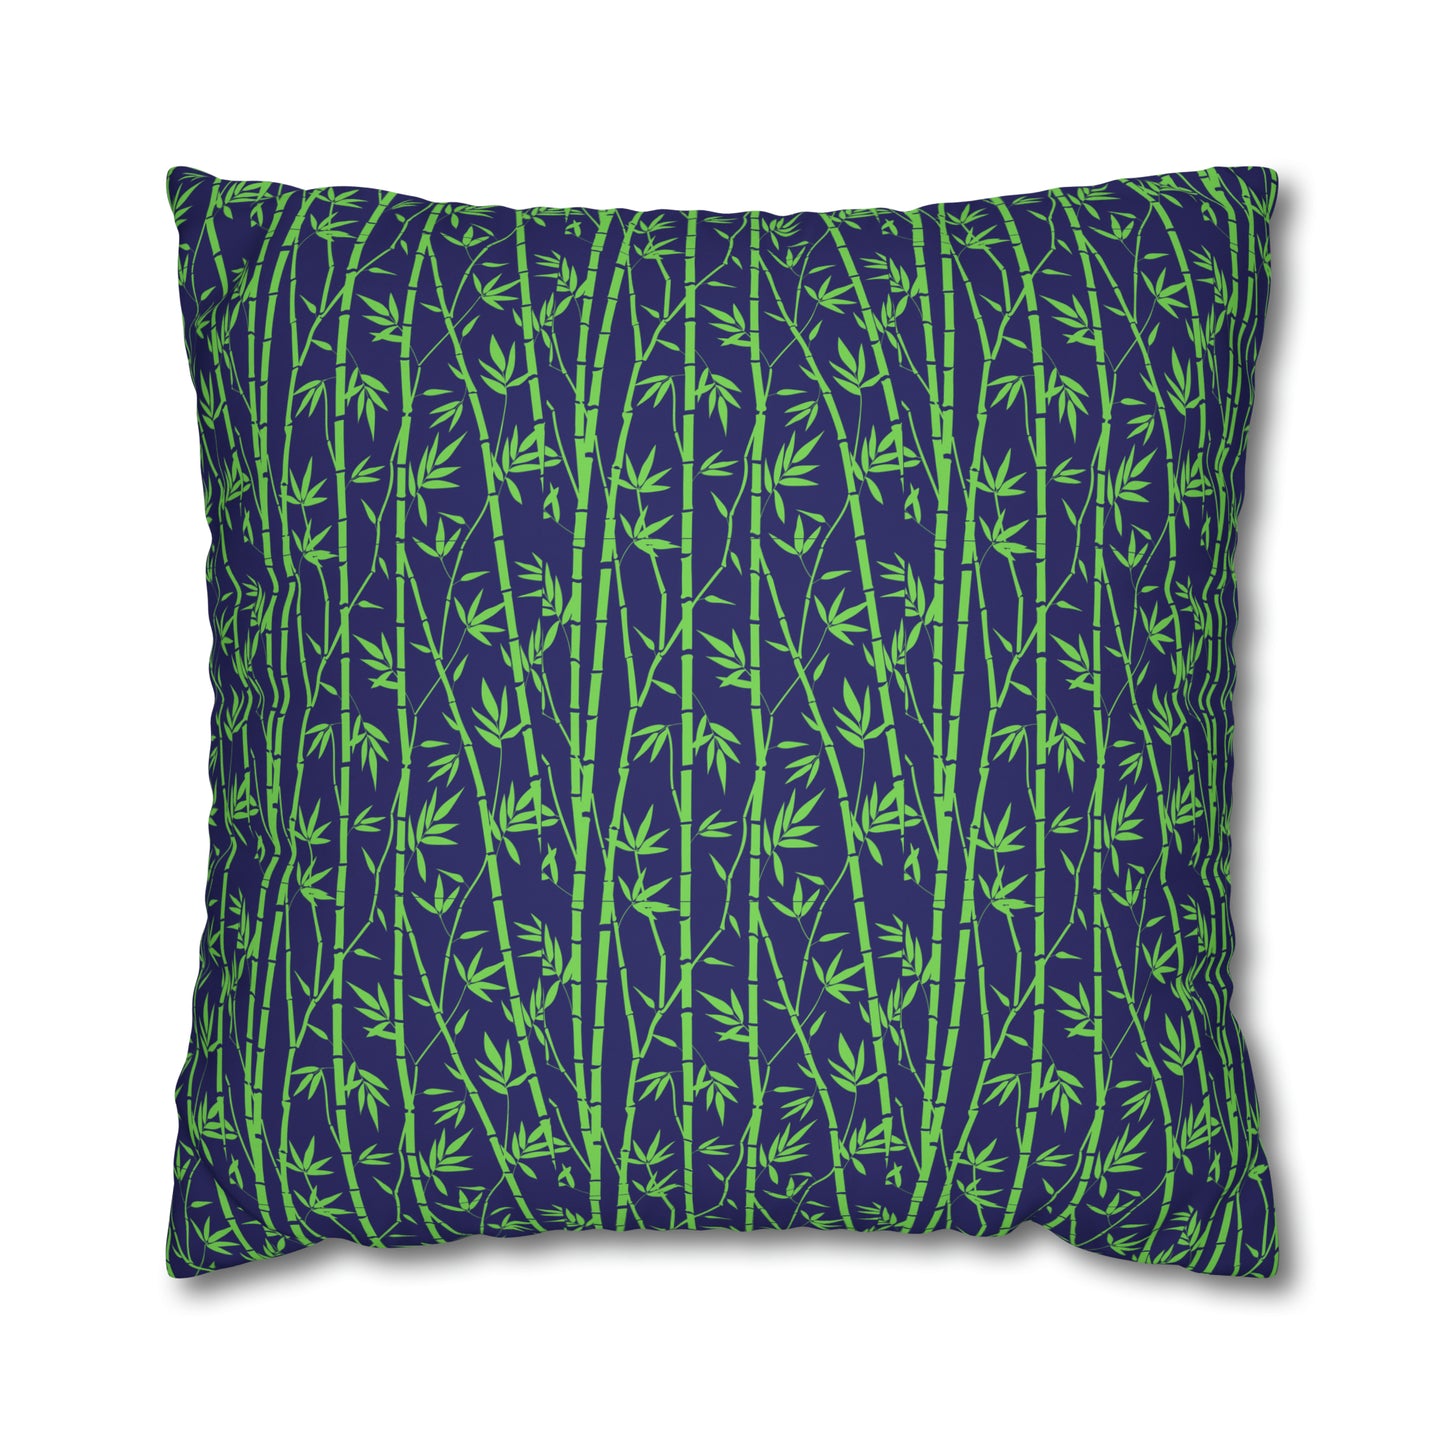 Bamboo Zen Meditation Garden Midnight Blue/Black Decorative Spun Polyester Pillow Cover